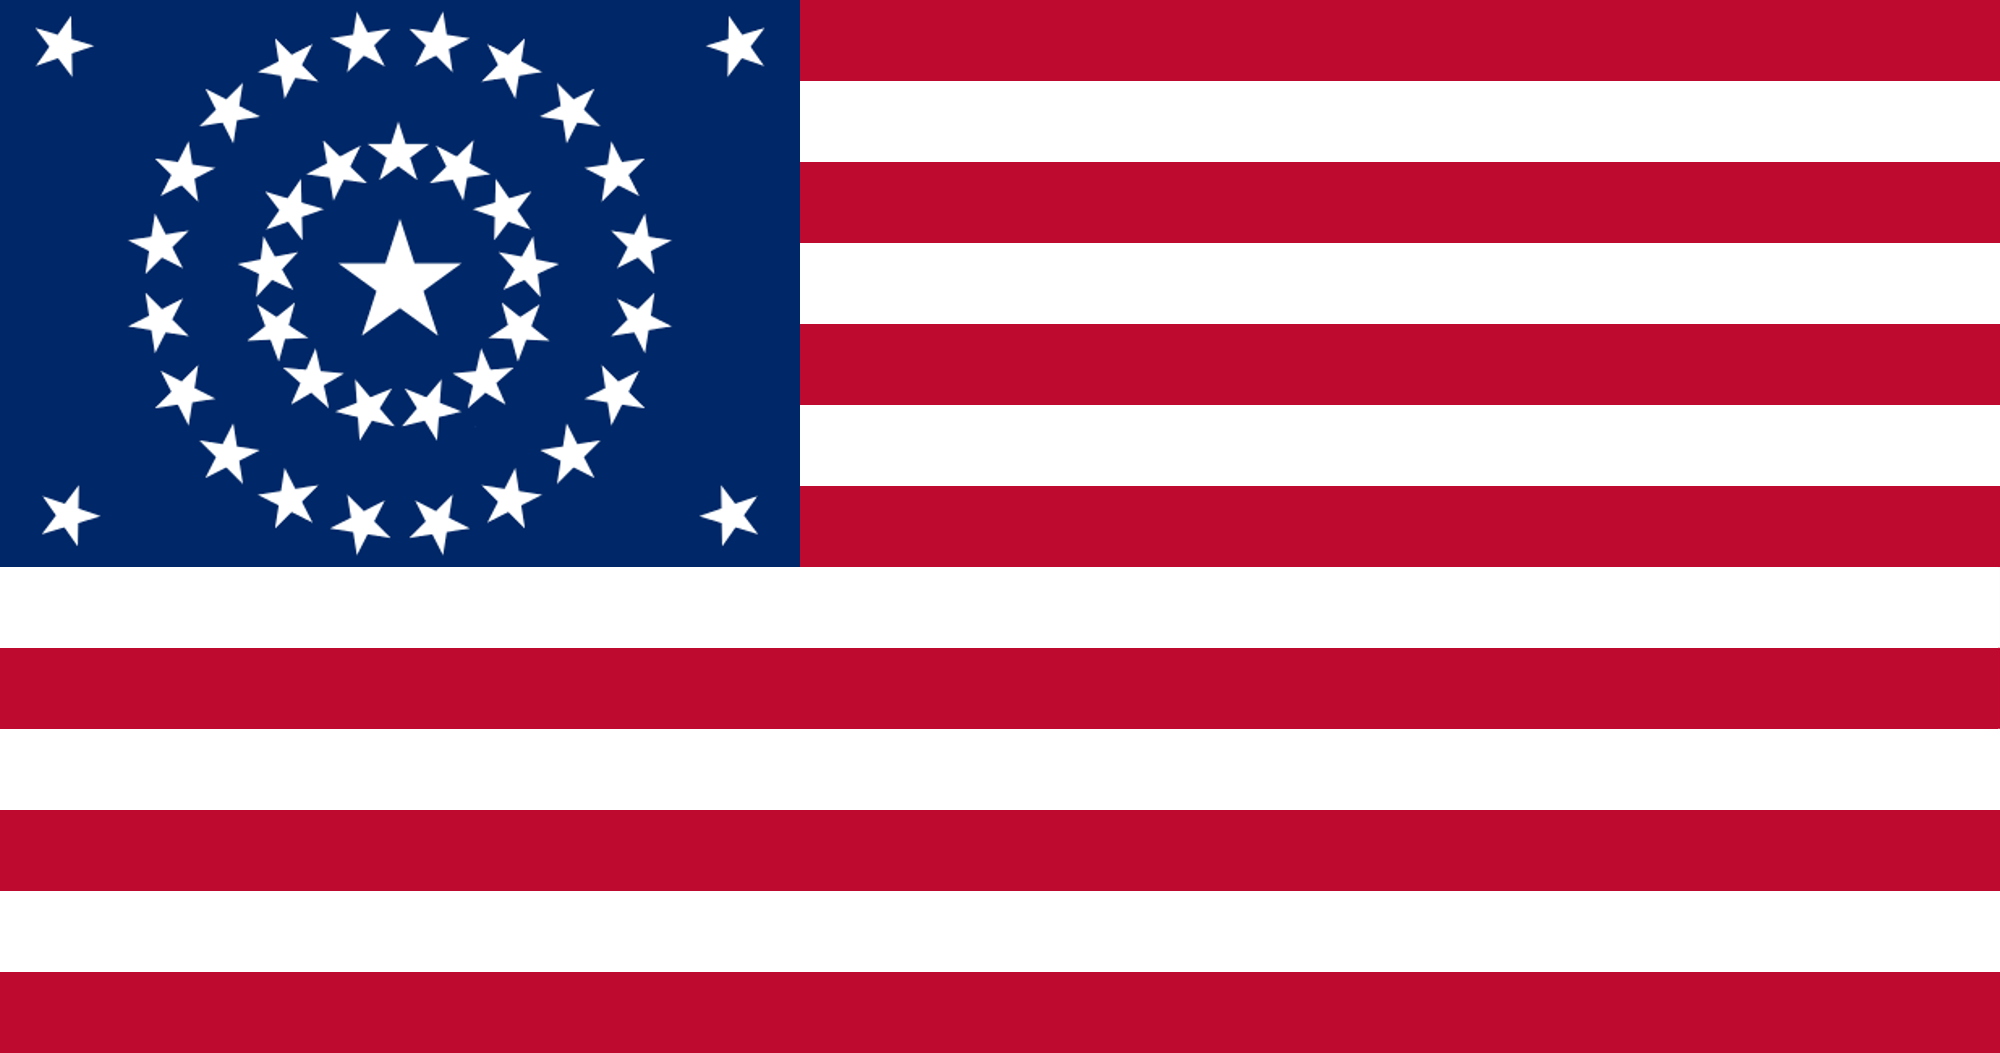 Alternate Flag Of United States 38 Stars V2 By Augustin Blot Lbps On